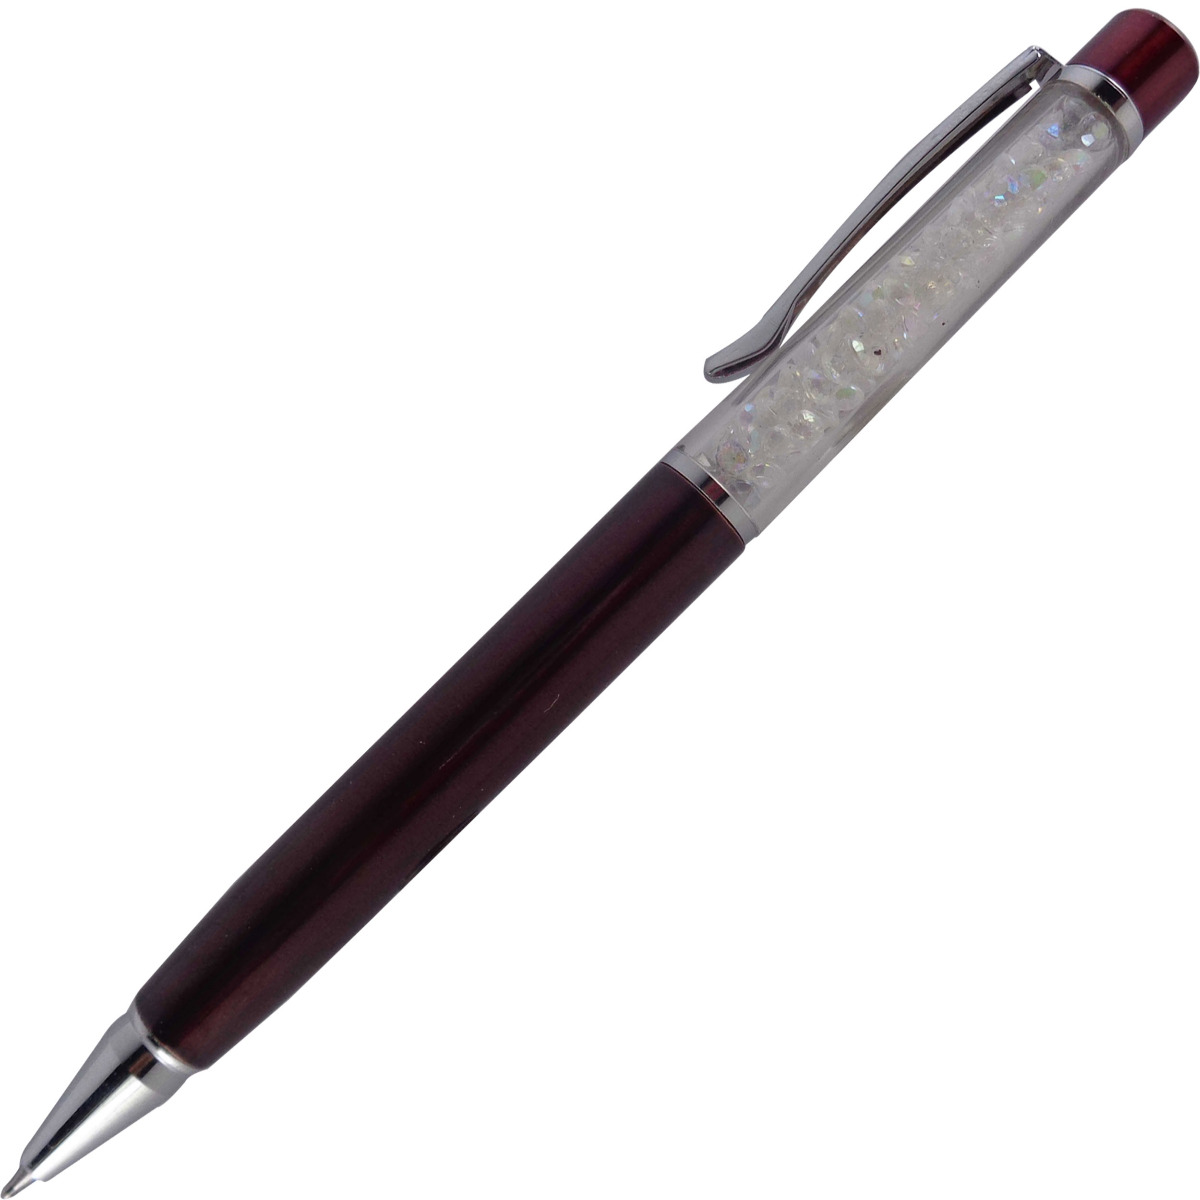 penhouse.in Model: 13801 Merrown color body with silver clip diamon fillled cap fine tip twist type ball pen